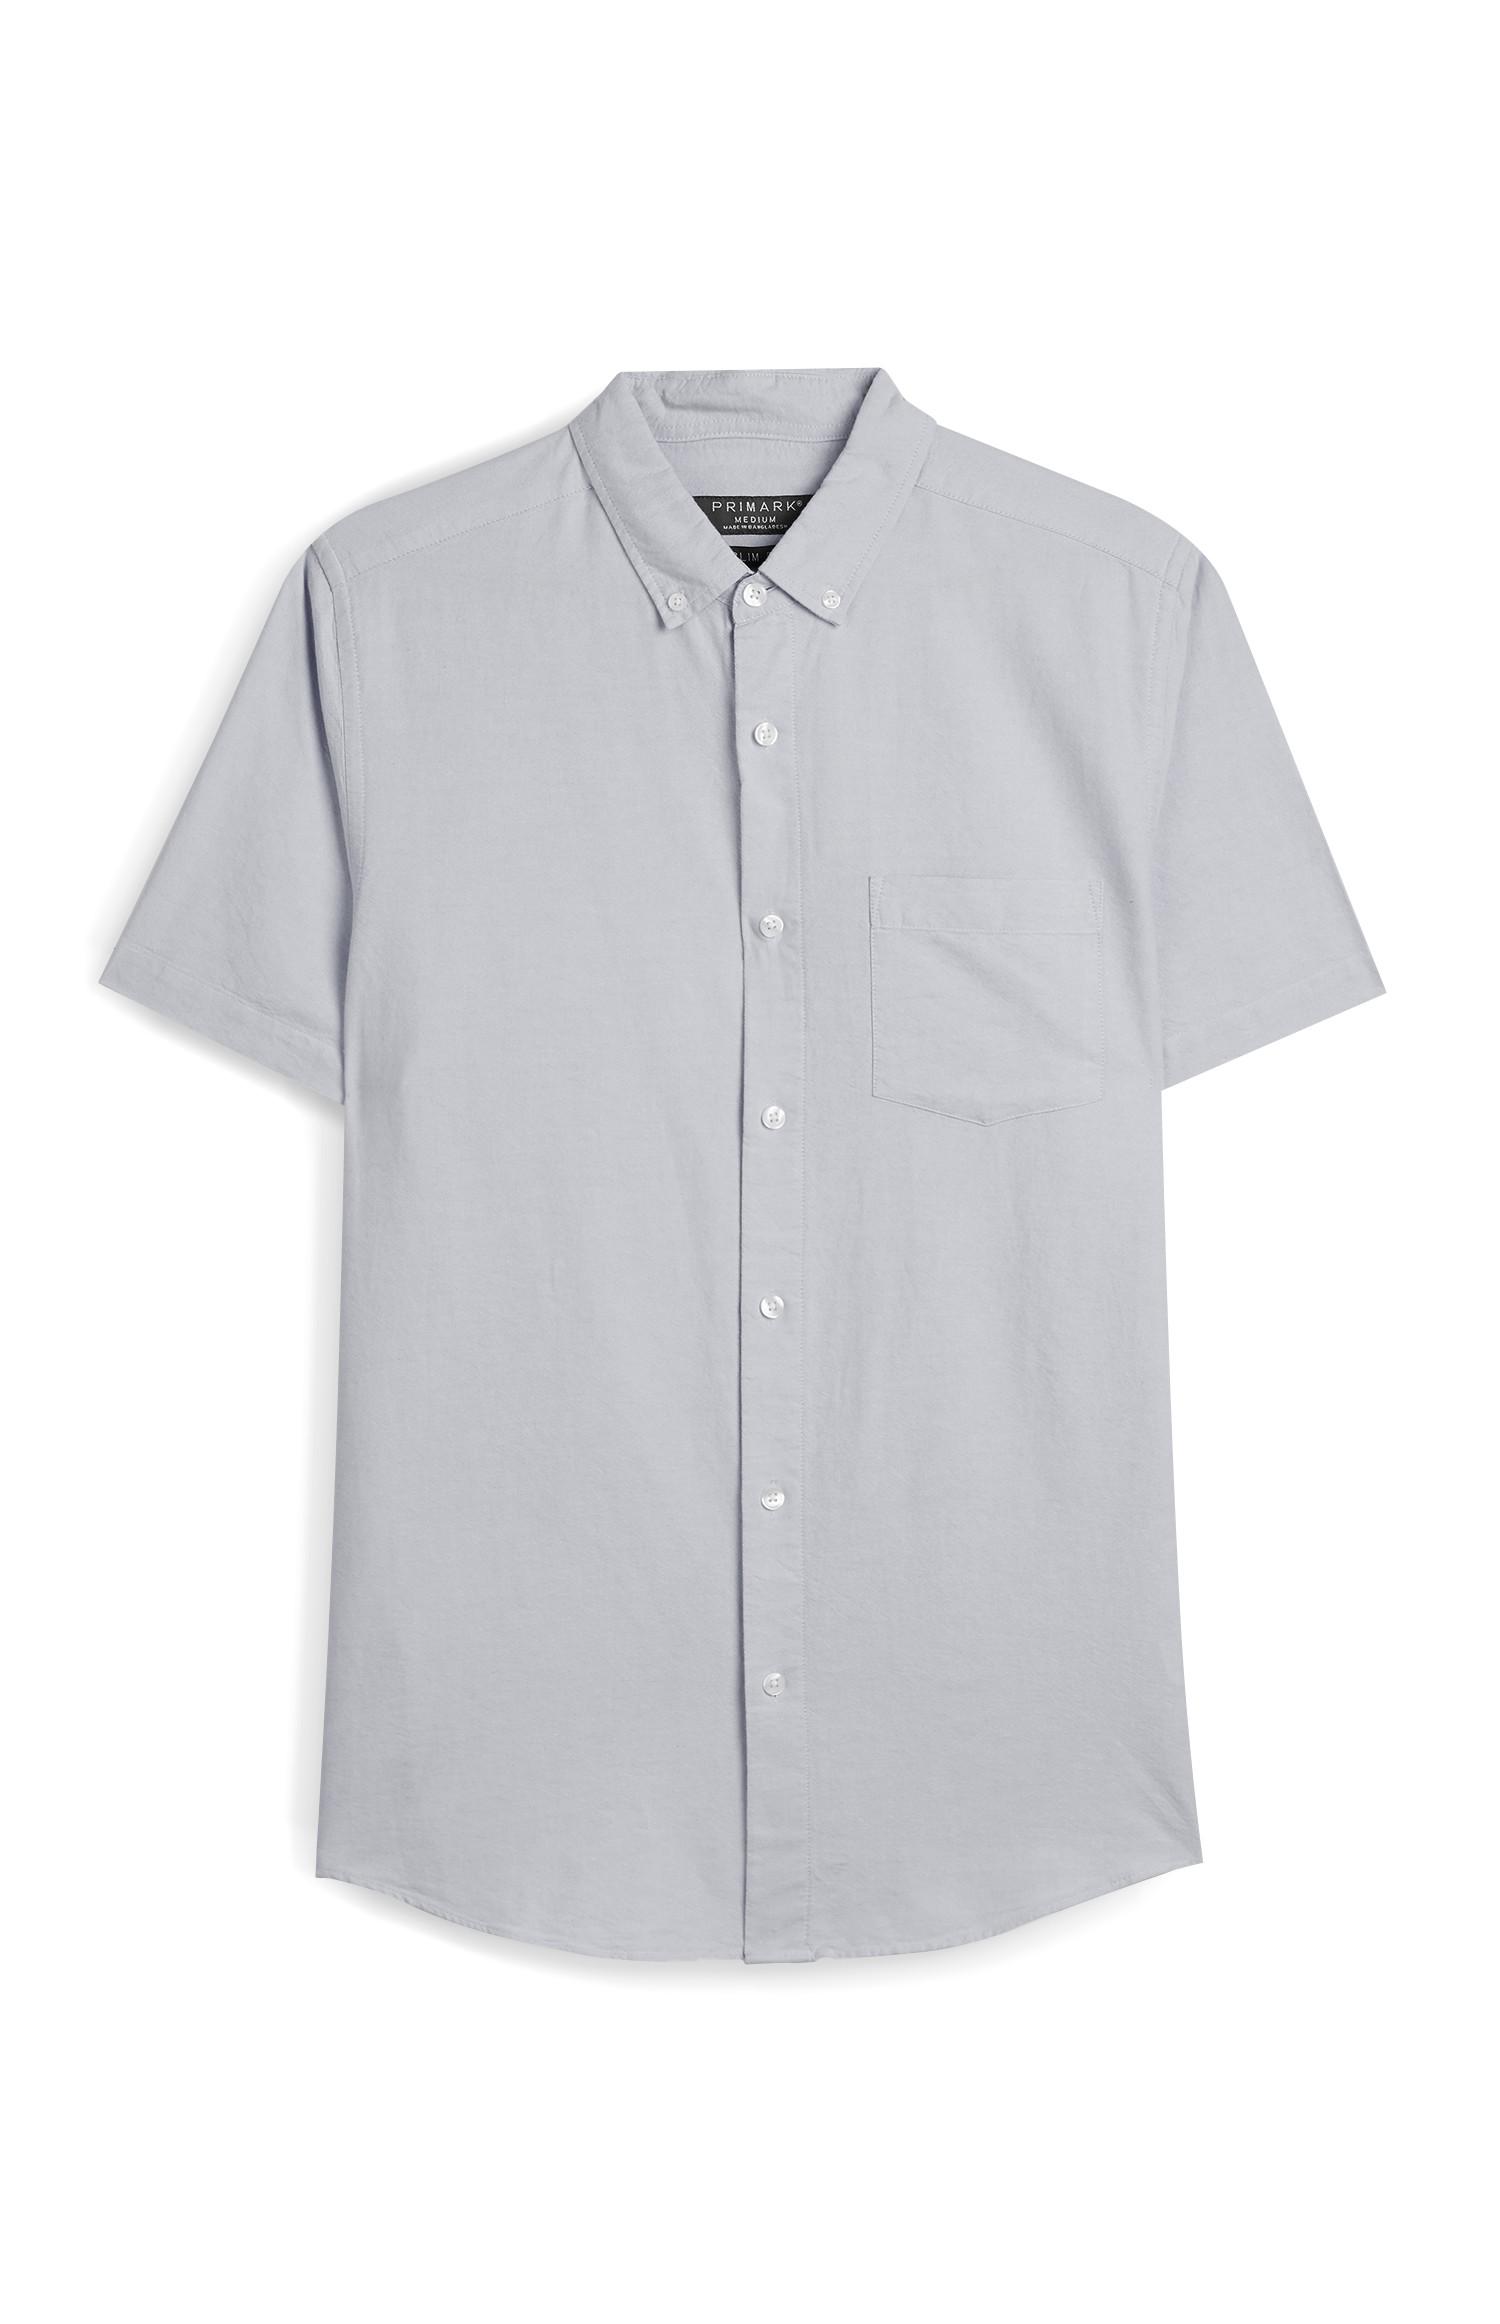 Shirts For Men Denim Long Sleeve Shirts Primark Uk - checkered shirt black and white roblox